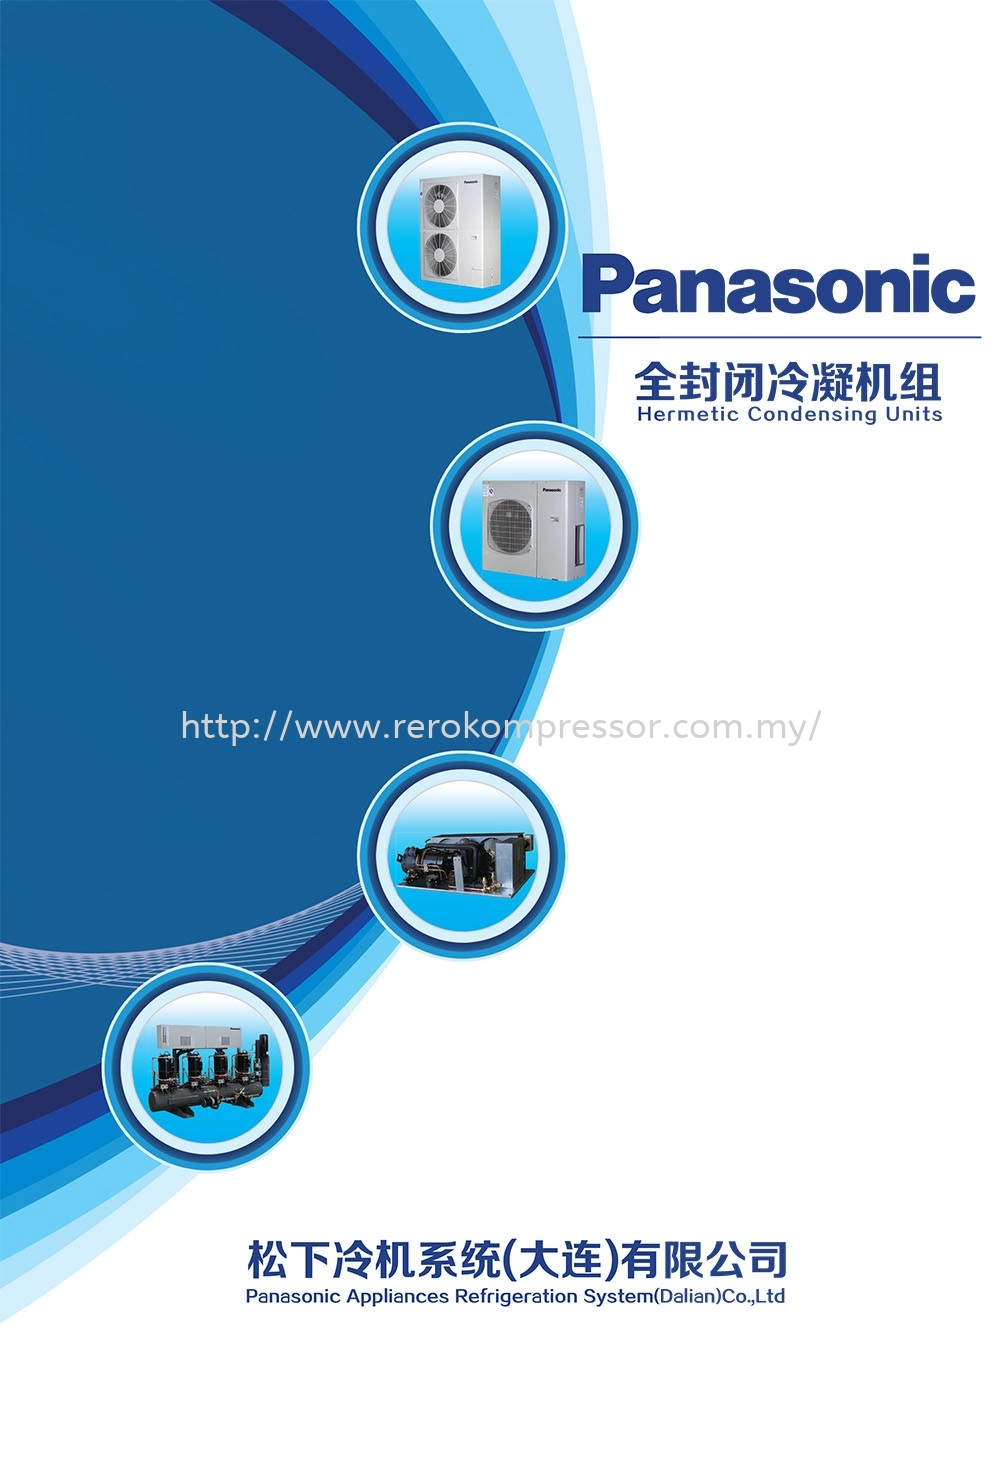 Panasonic Hermetic Condensing Unit